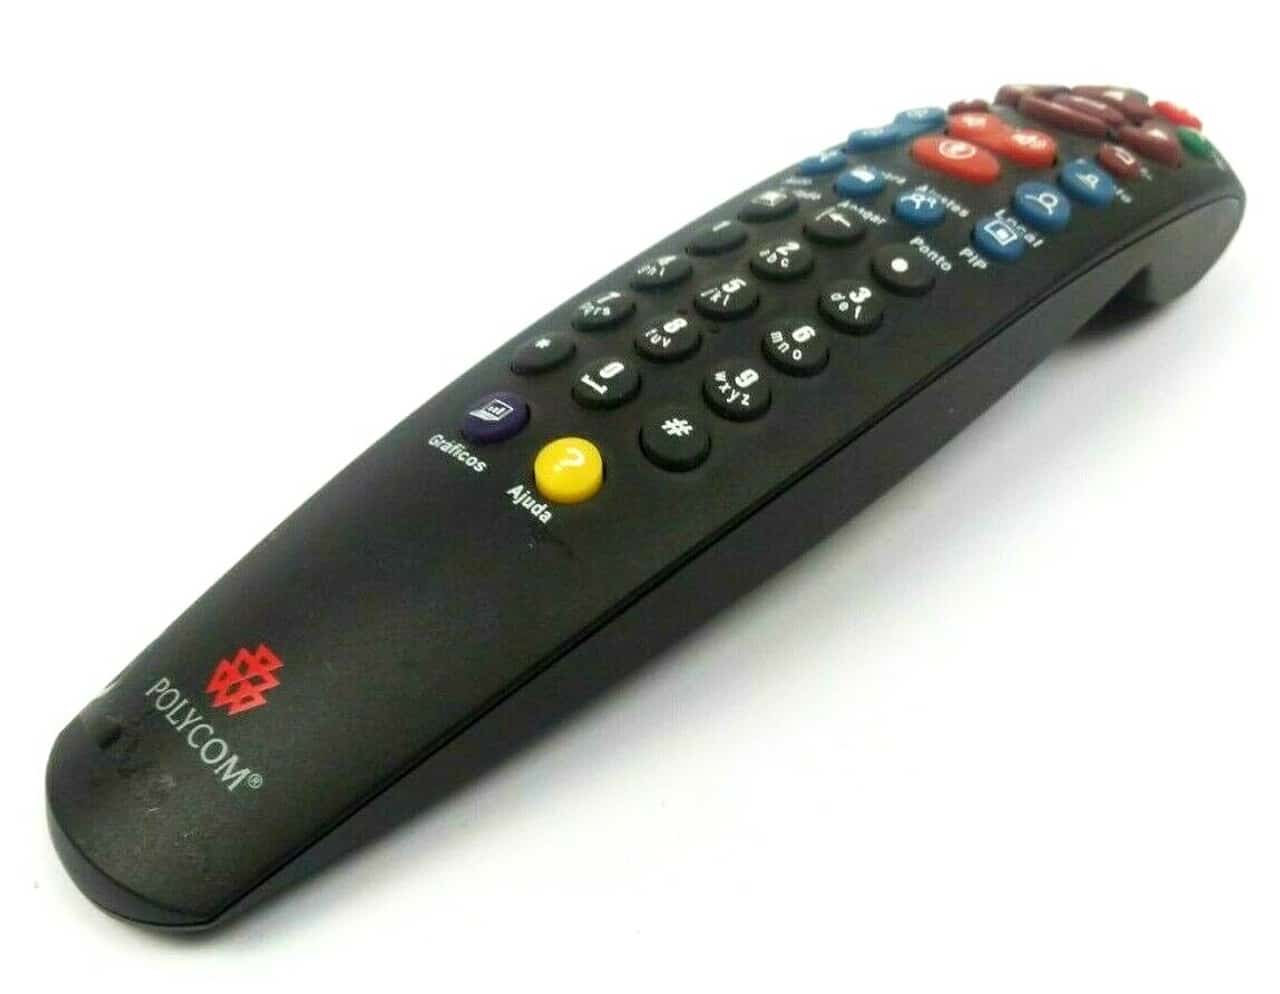 polycom vsx seri / qdx6000 remote